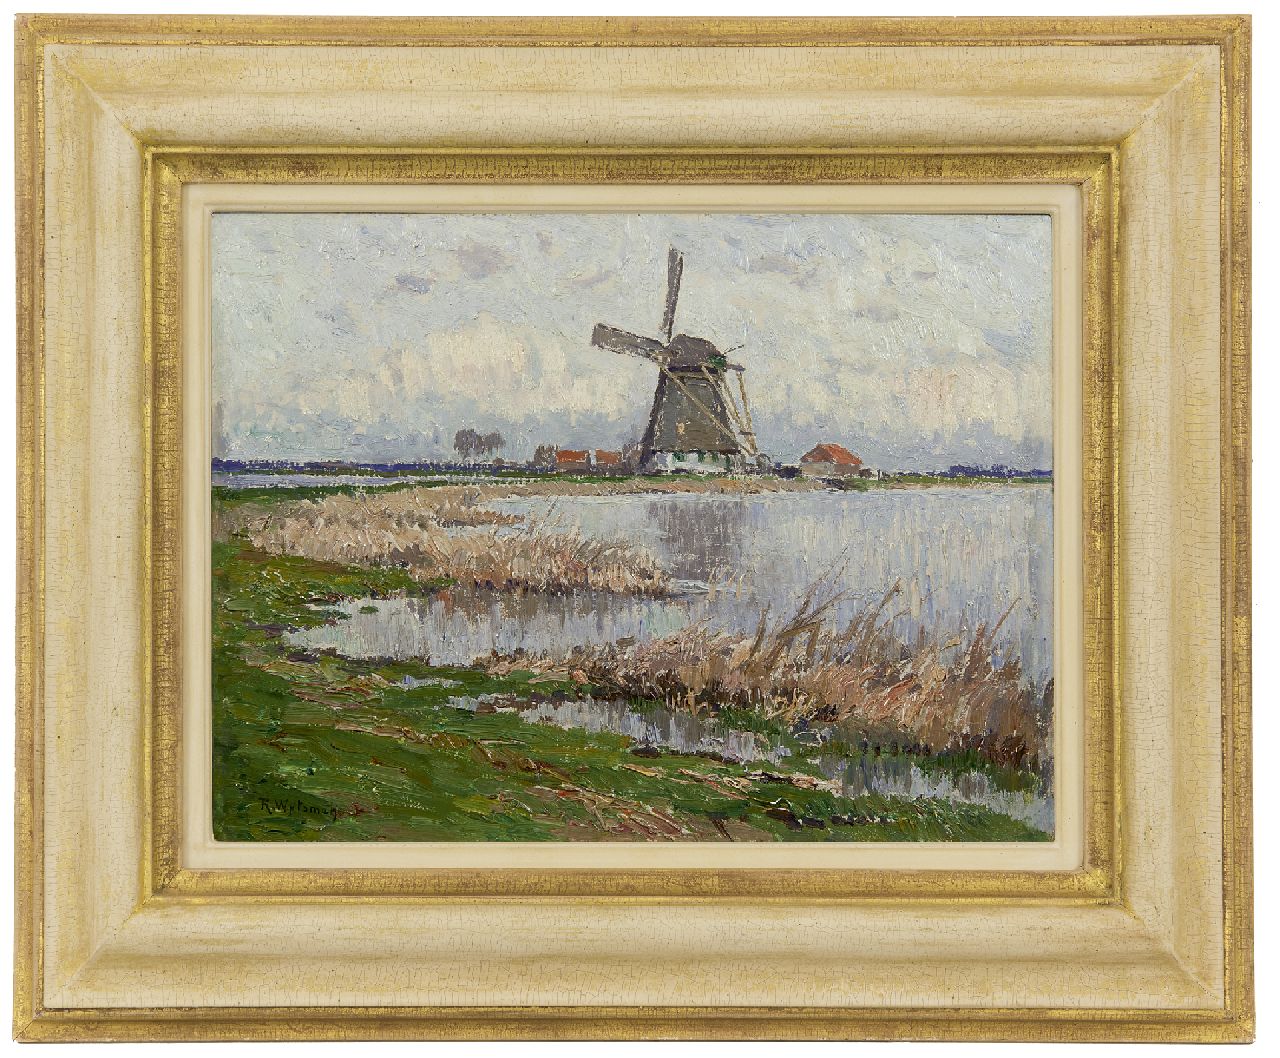 Wytsman R.P.  | 'Rodolphe' Paul Wytsman, The Prinsenmolen in Hillegersberg, near Rotterdam, oil on panel 26.9 x 36.0 cm, signed l.l.